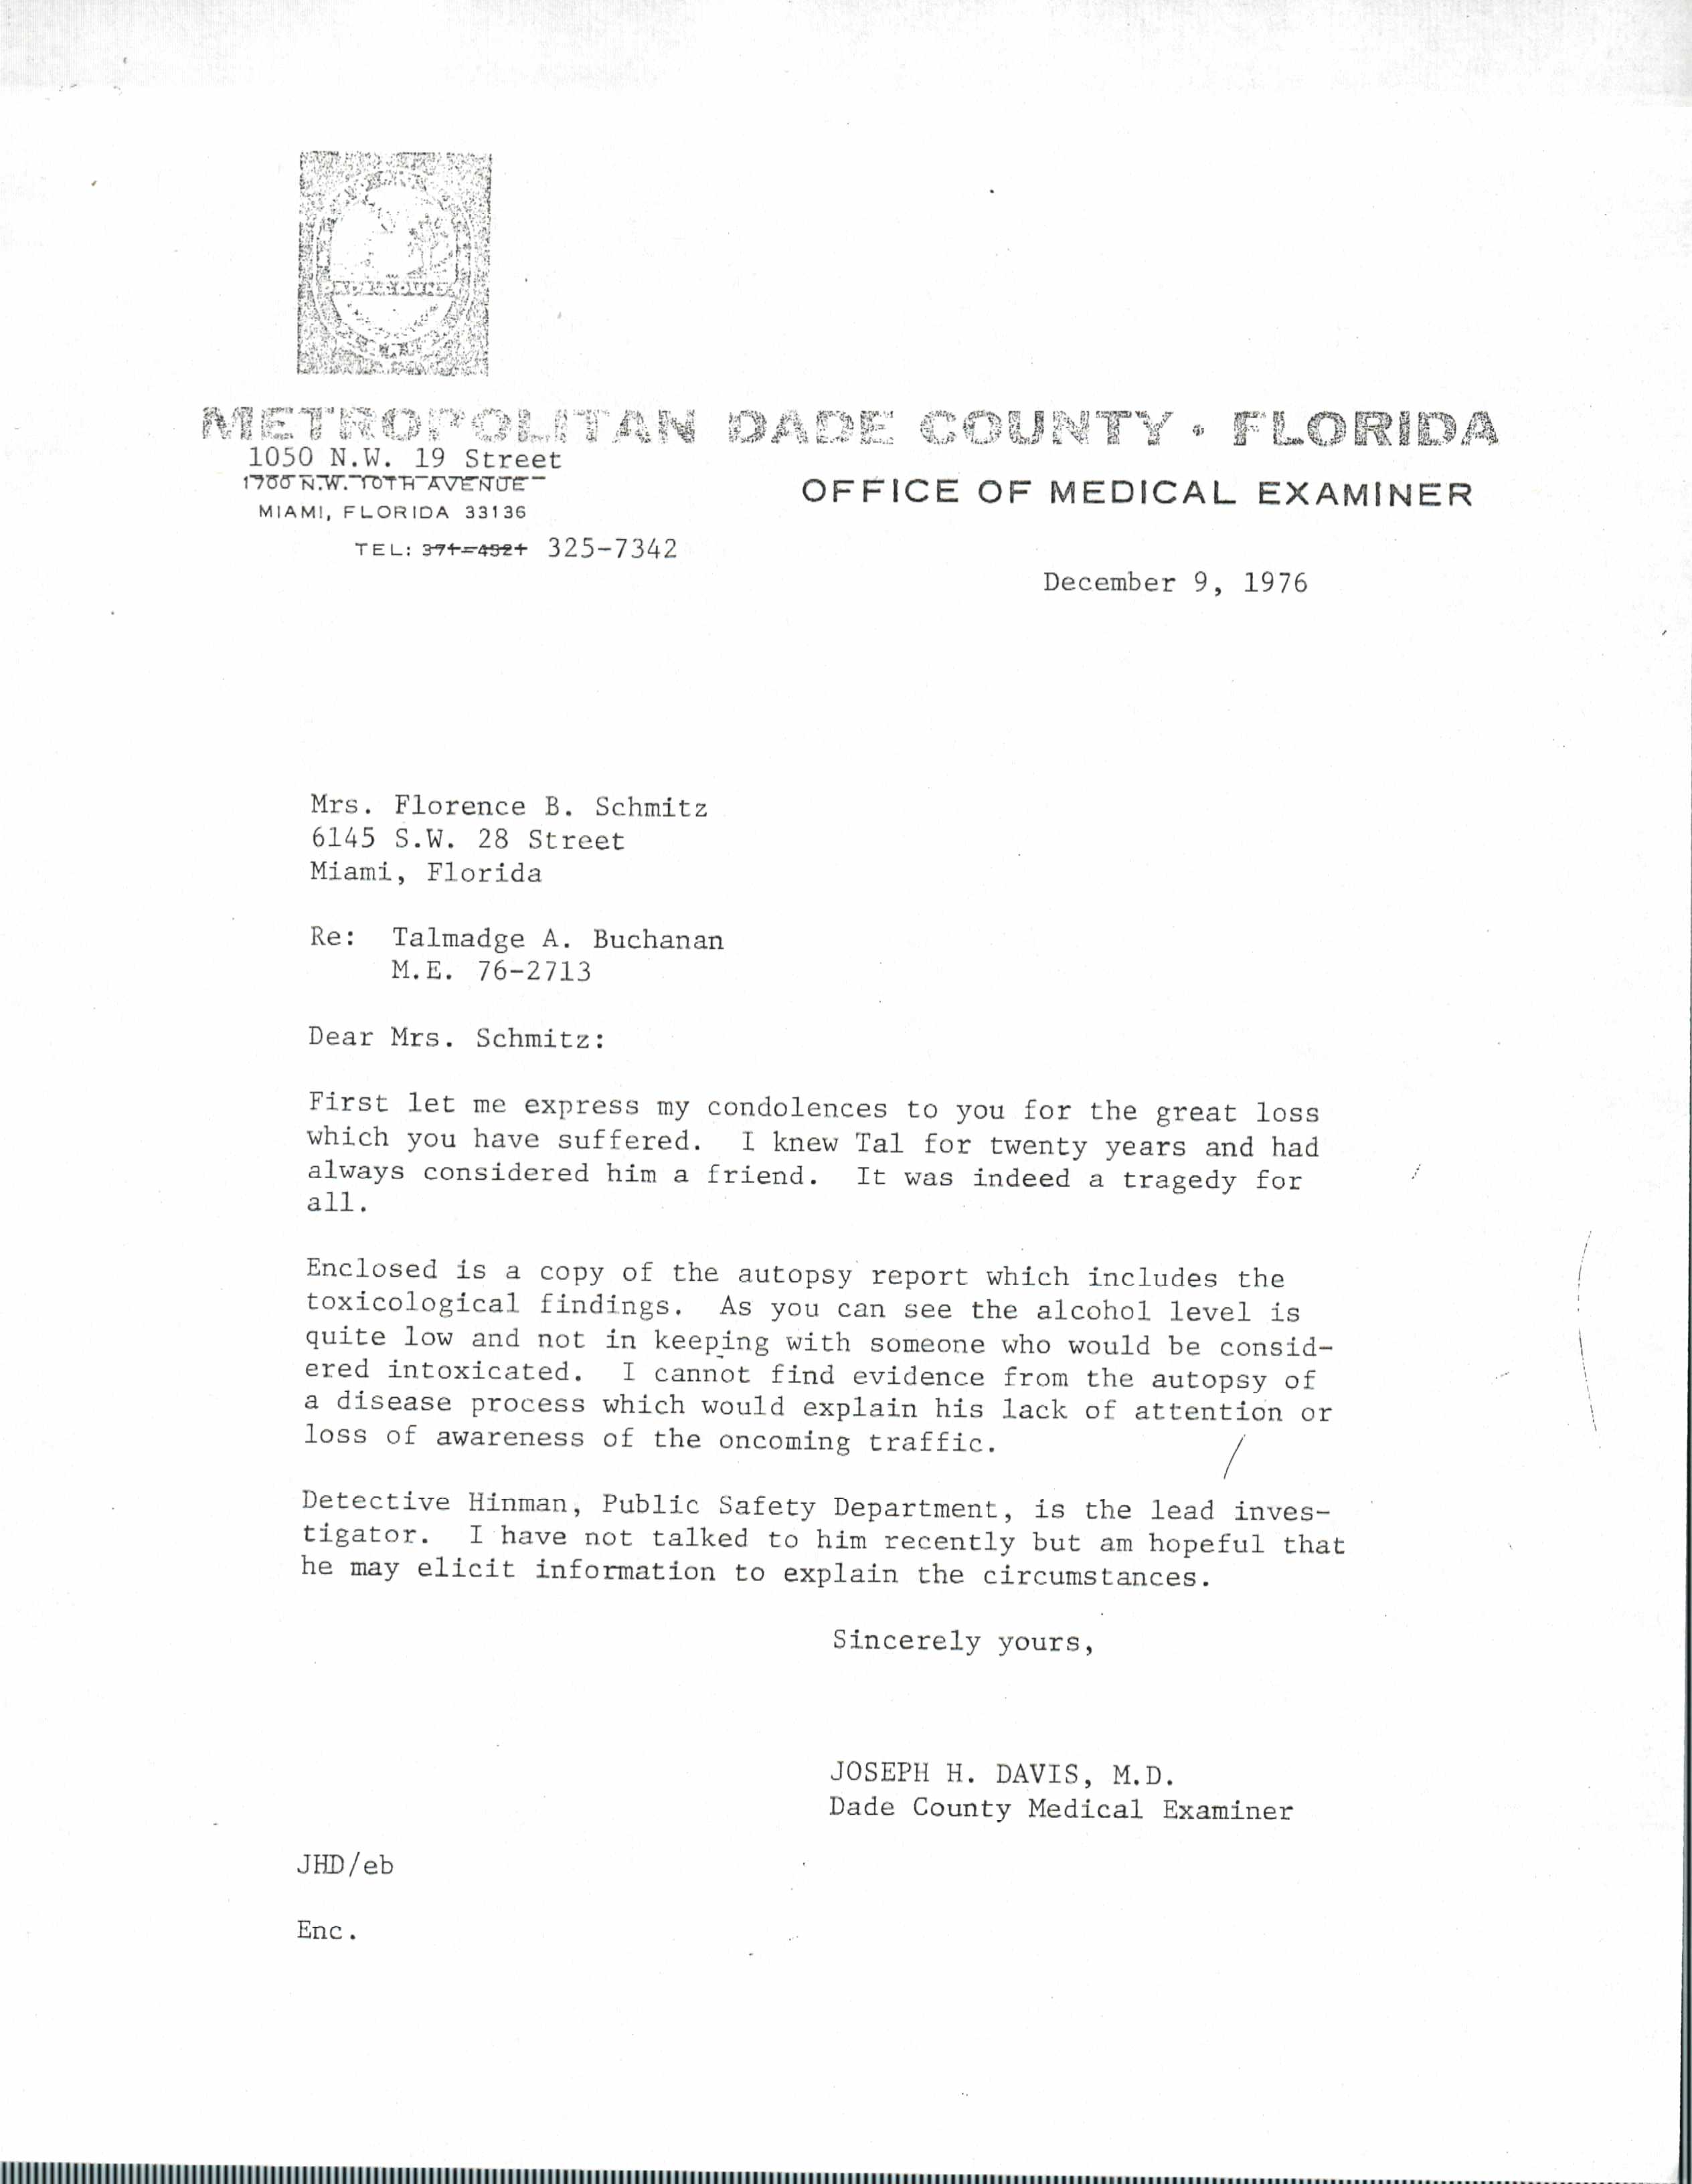 Letter from Dade ME Joe Davis to Buchanan's mother. (Source: Paul Novack)